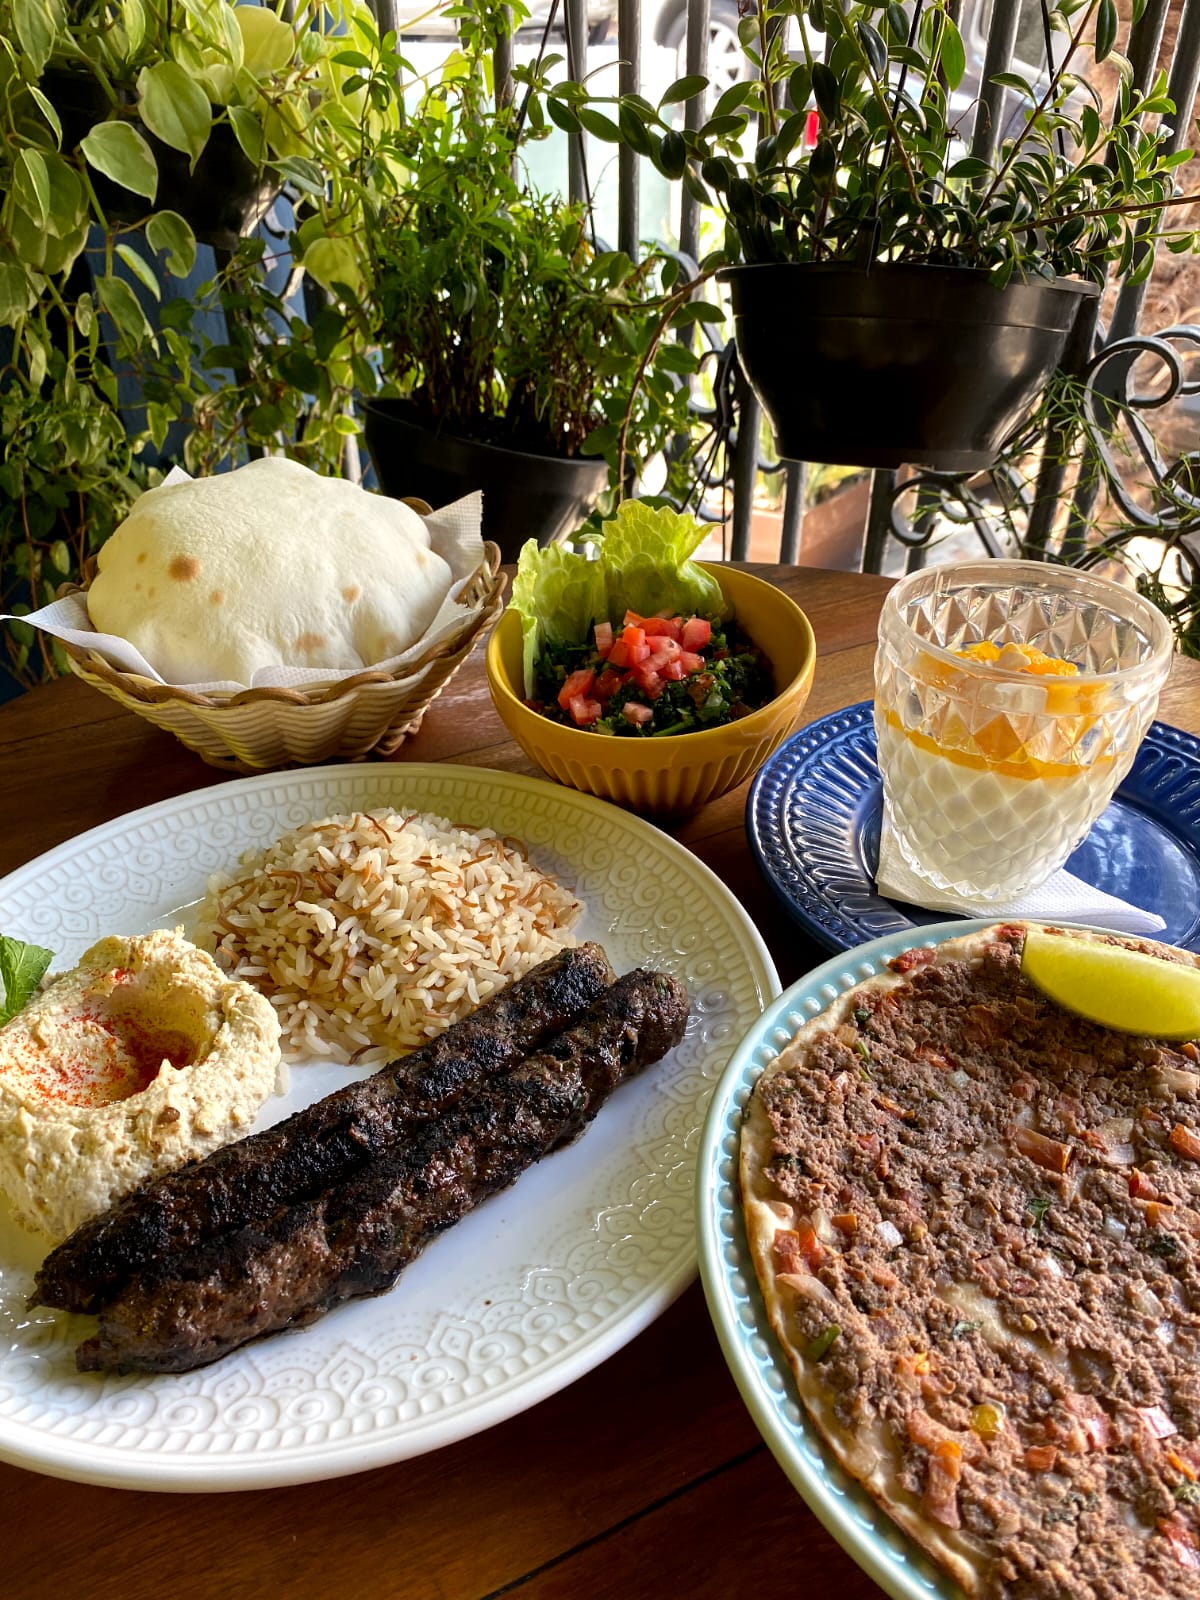 Chef Benon: para explorar vários sabores árabes nos dias de semana, vá de prato combinado